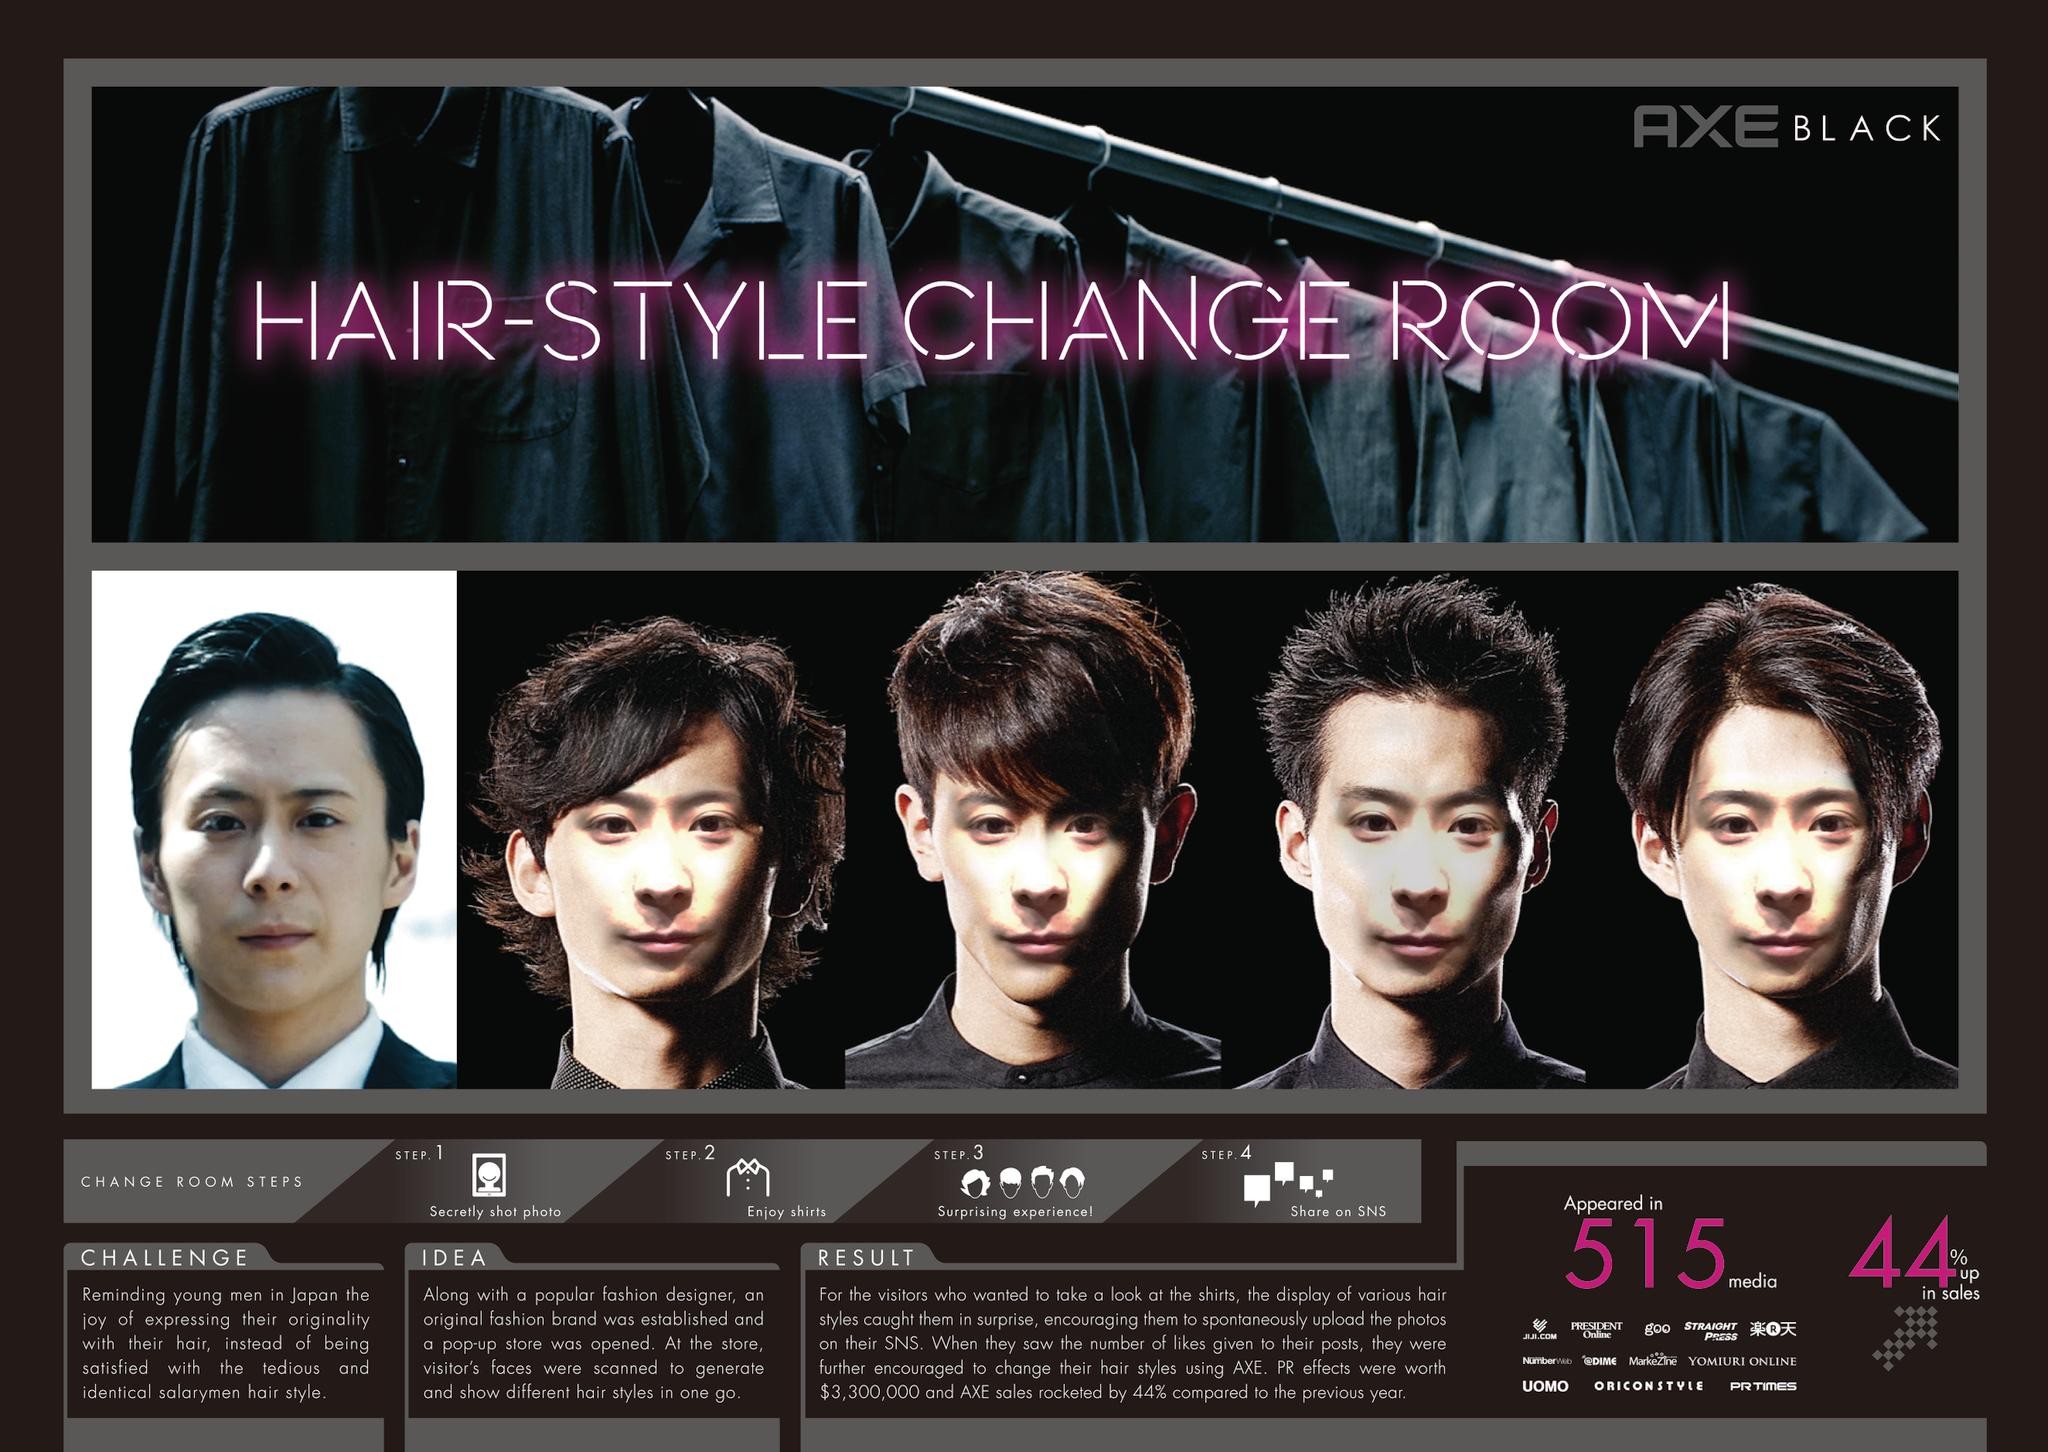 HAIR-STYLE CHANGE ROOM